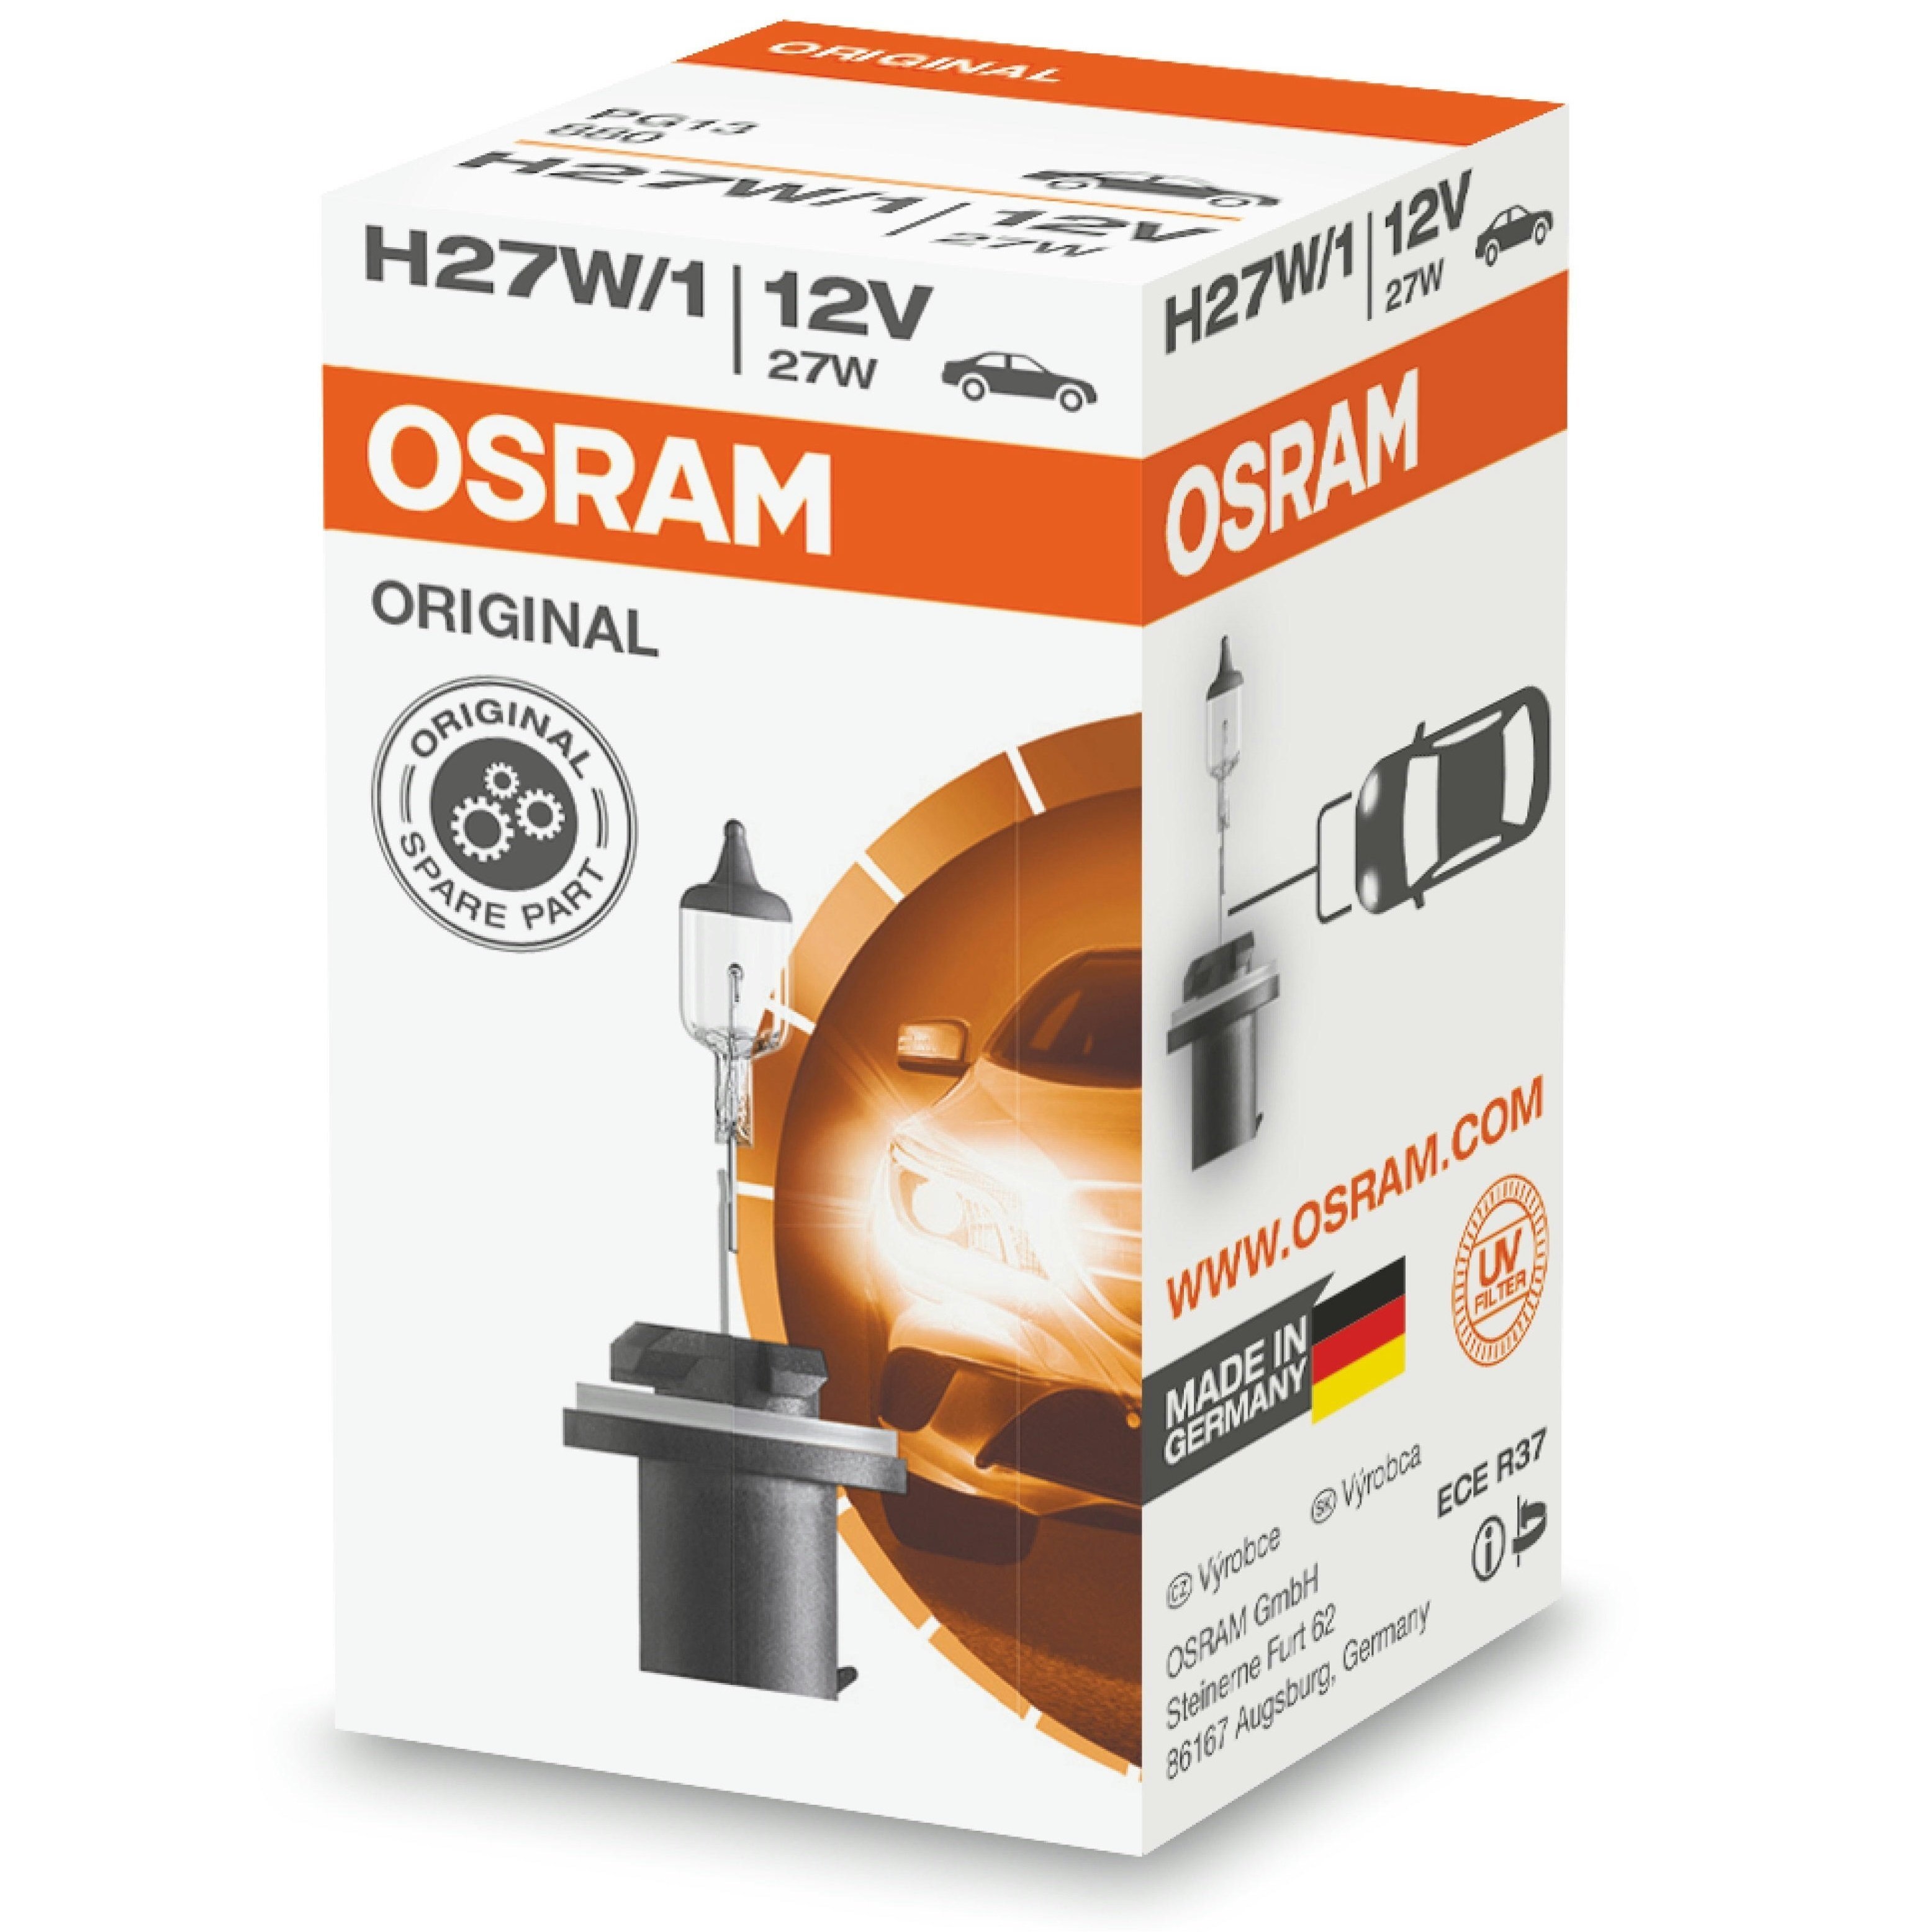 Лампа Osram накаливания 12V н27W/1 27W Pg13 Original Line (OS_880) фото 1